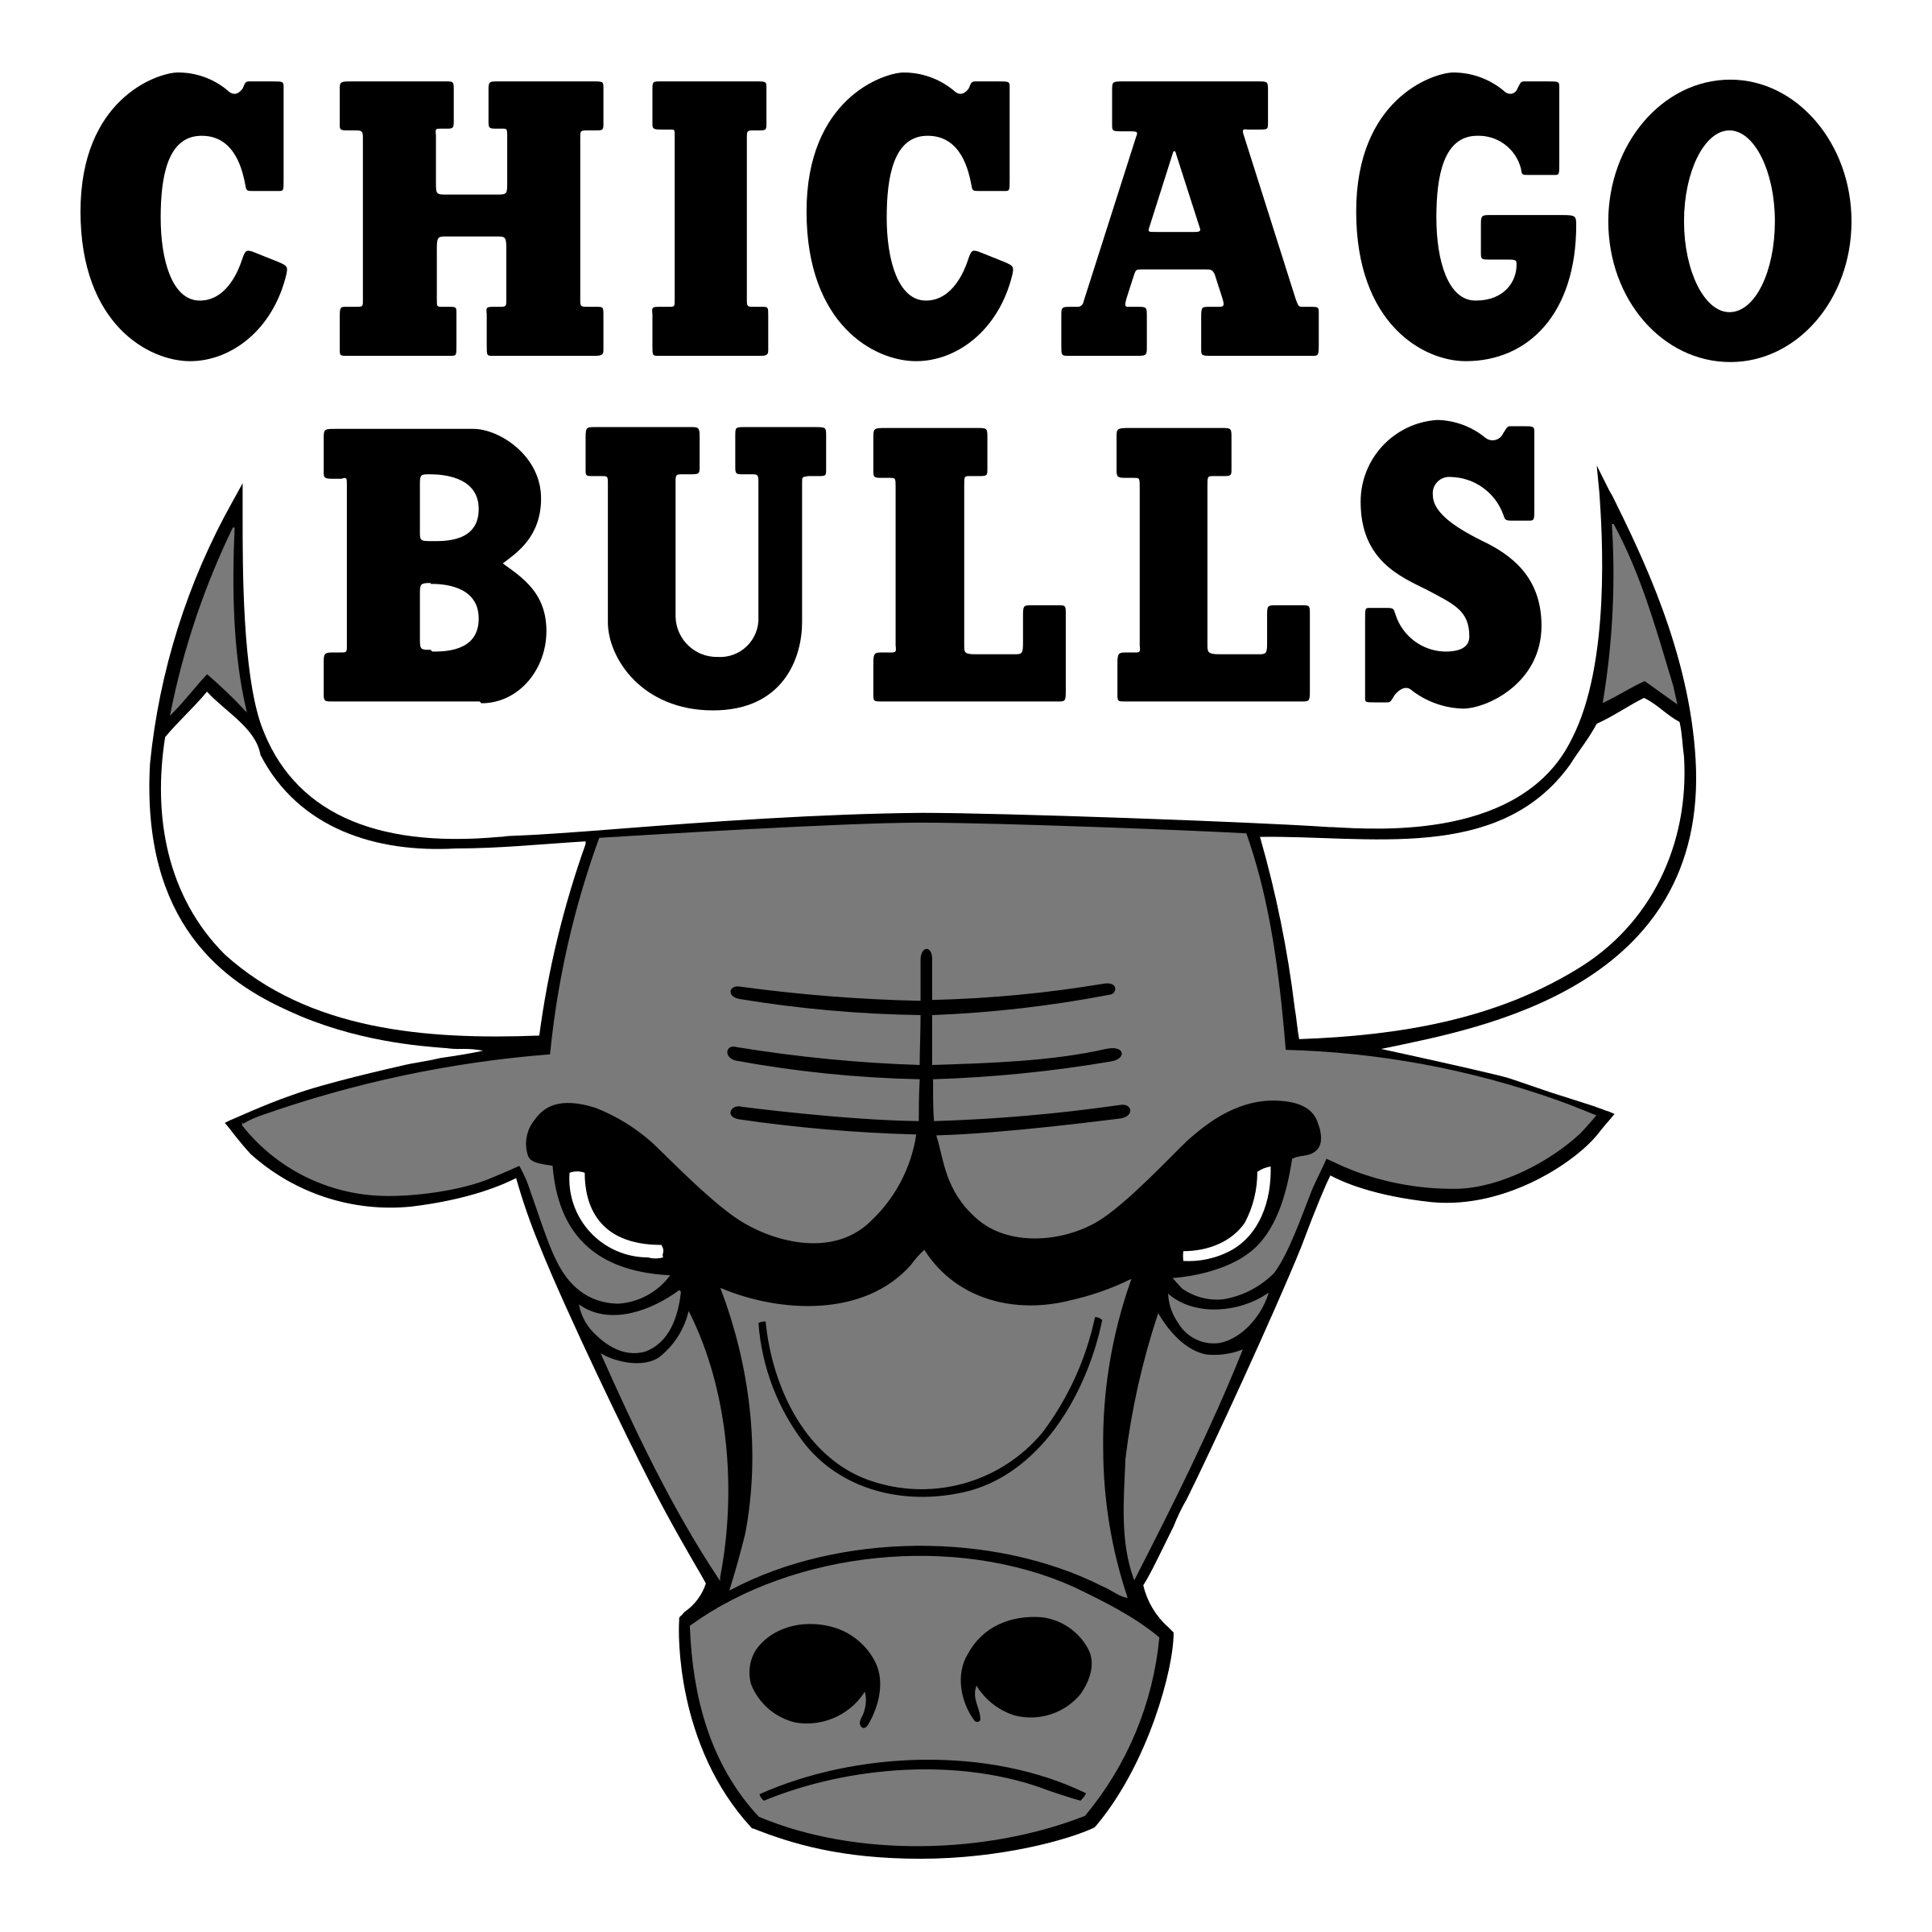 All-Black Bulls Logo - Chicago Bulls Logo PNG Transparent & SVG Vector